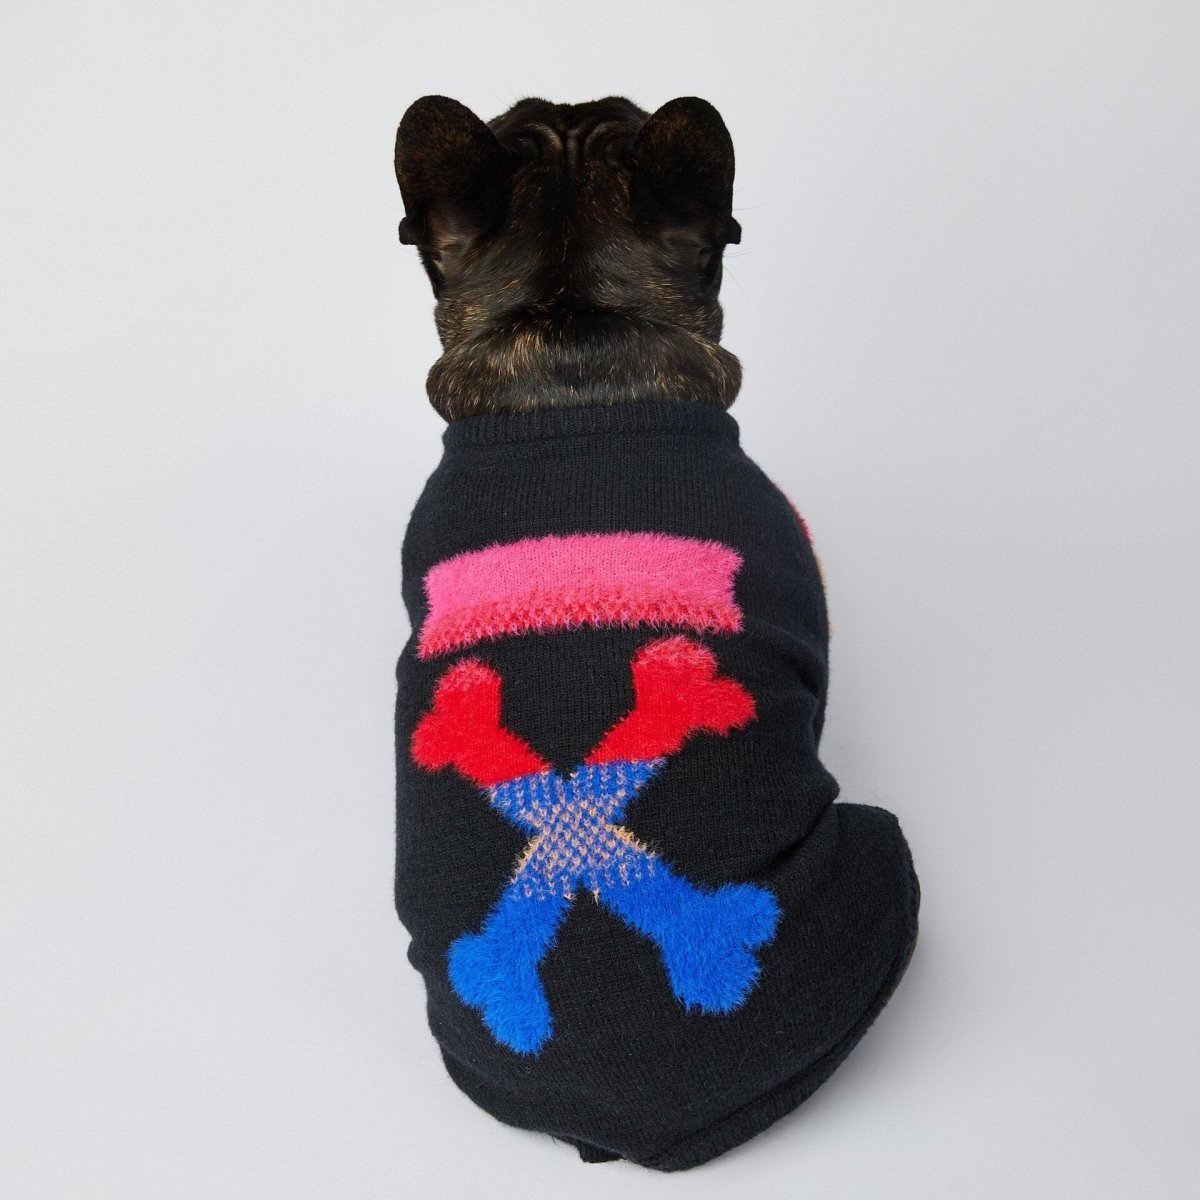 Woof French Bulldog Knitted Sweater - French Bulldog Store